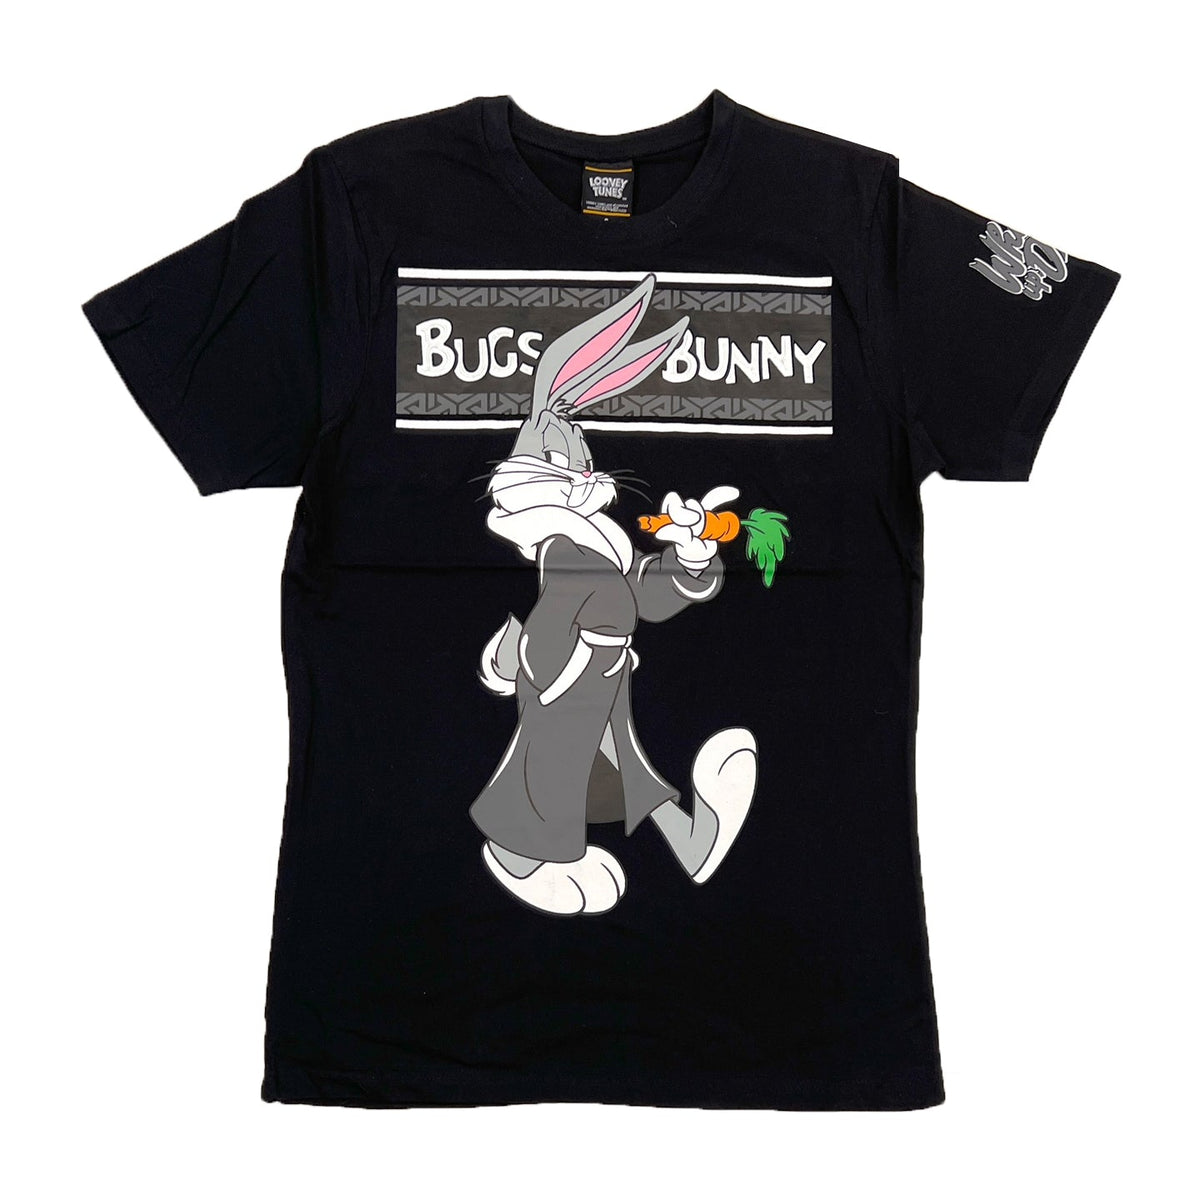 / Looney Tunes 2 Bugs Bunny (Black) $30 Tee $16.99 for